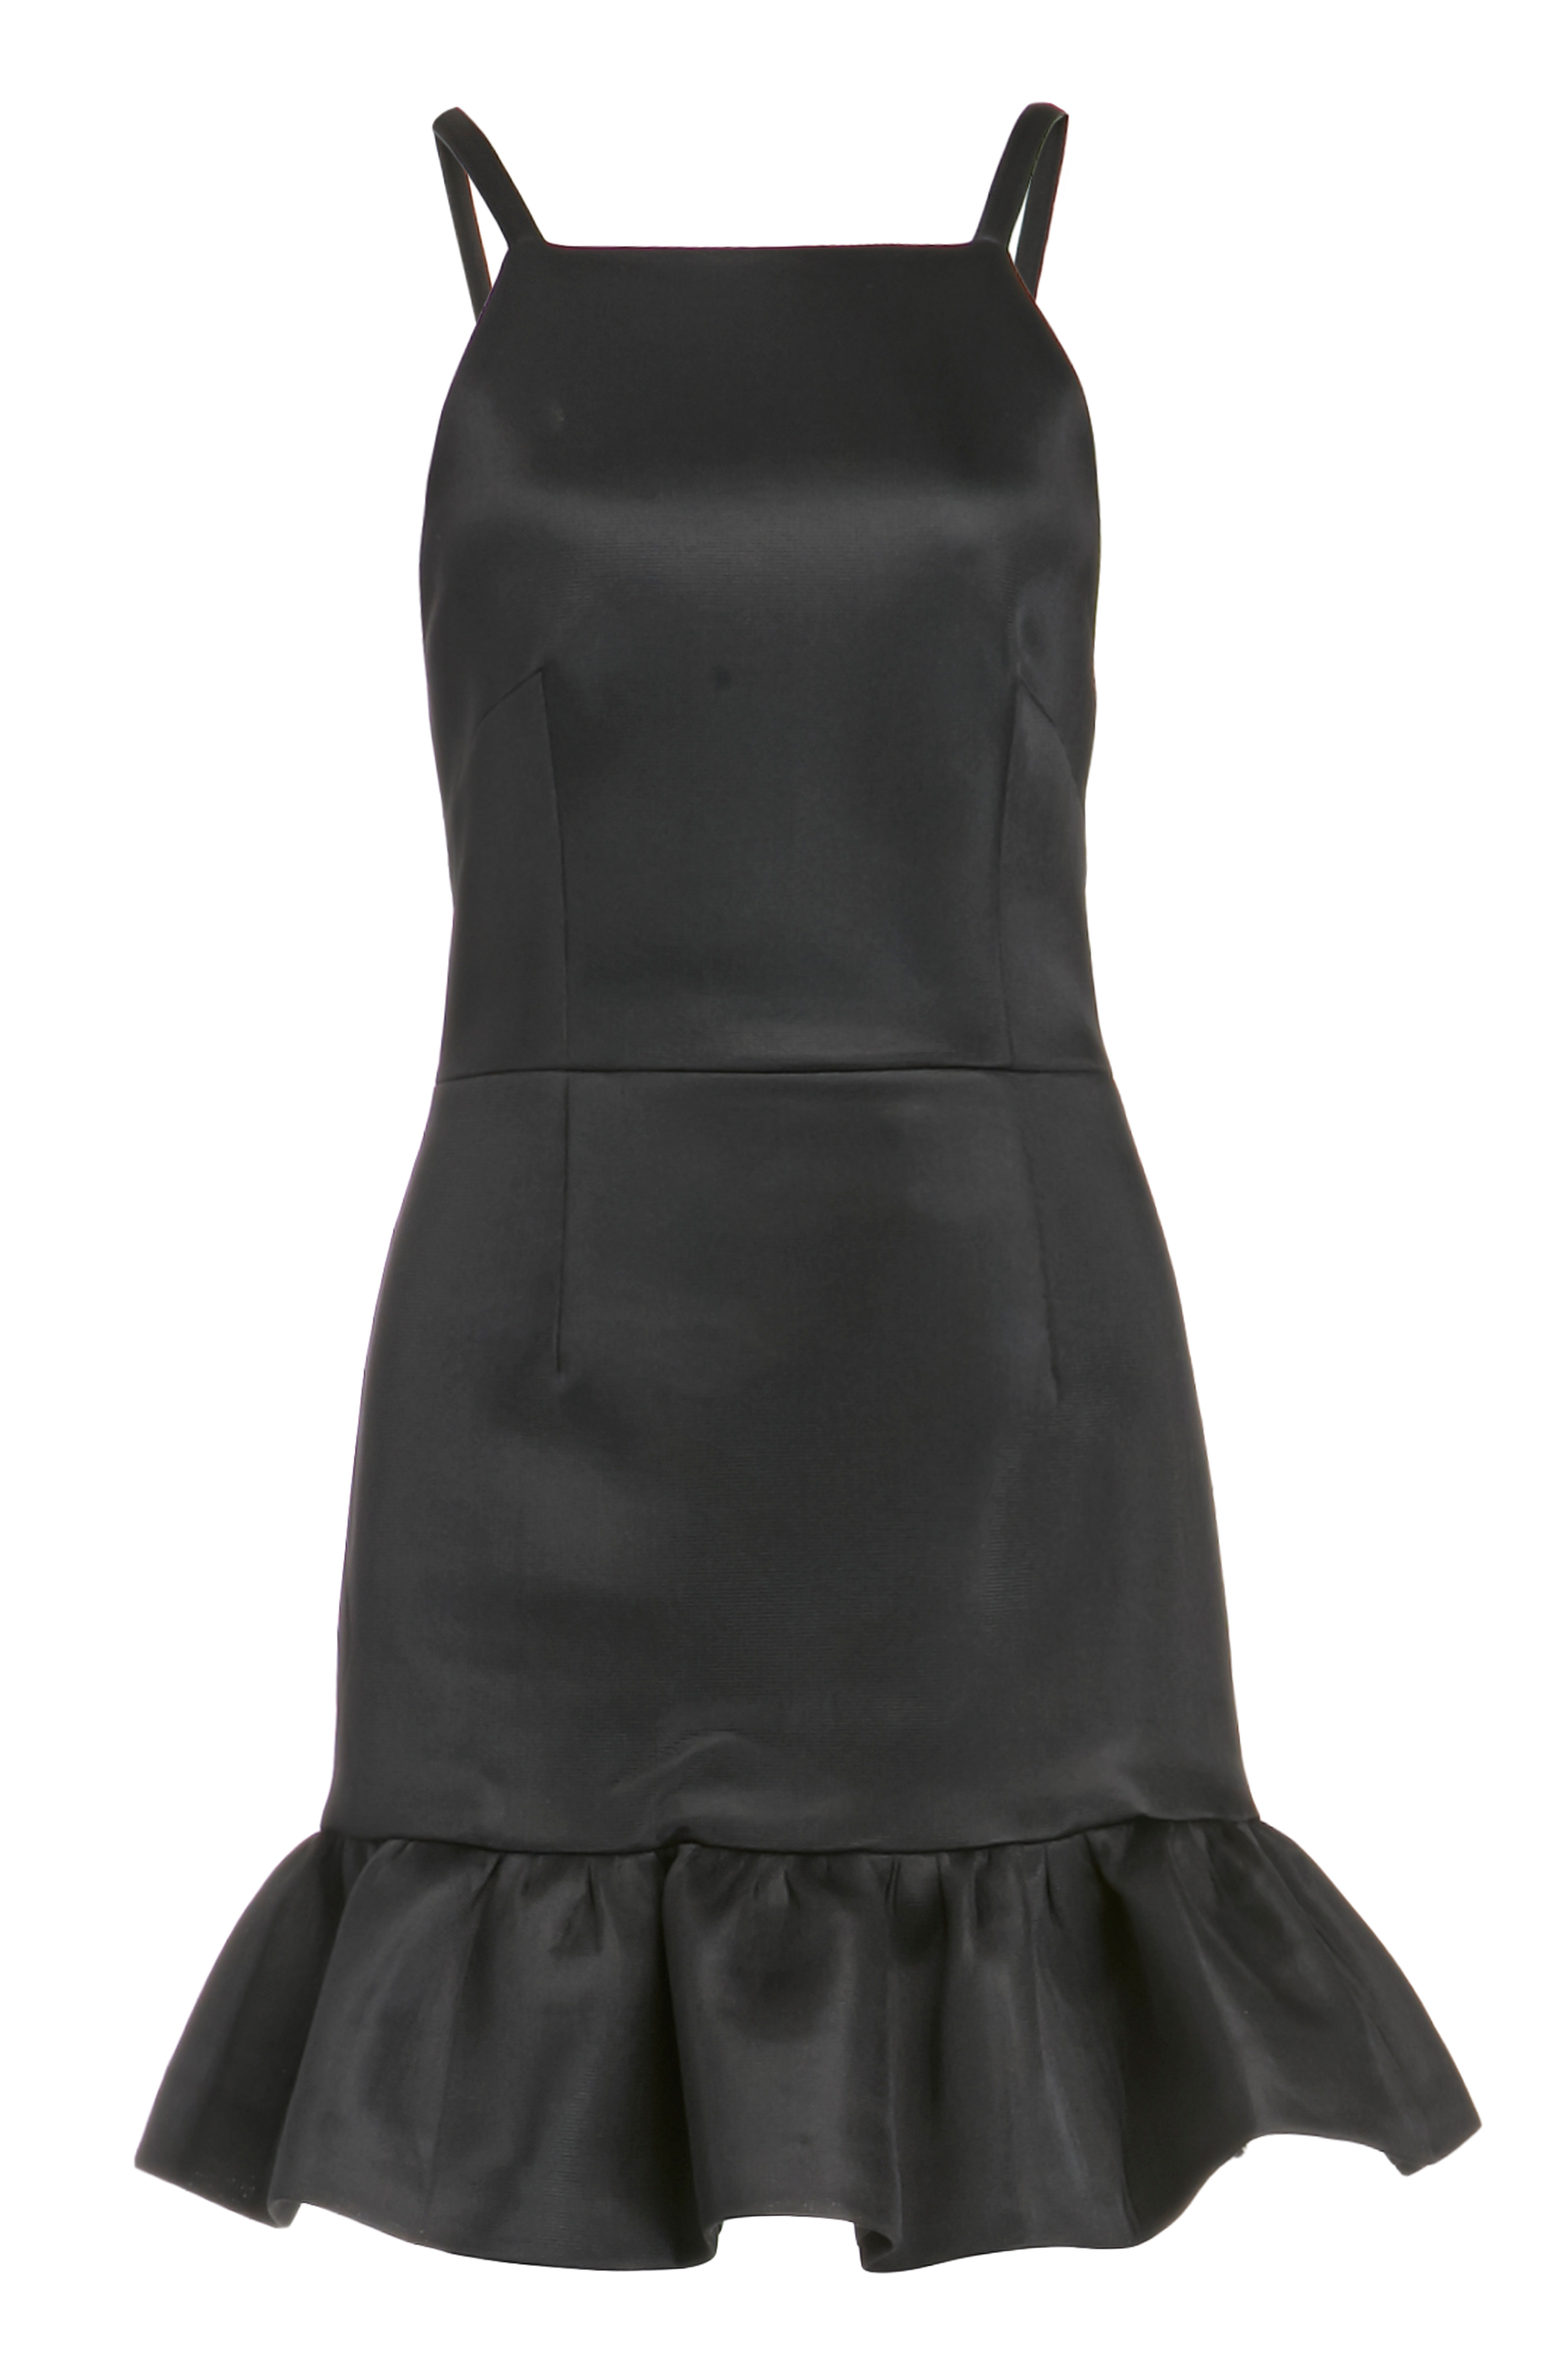 Finders Keepers Mesmerize Dress in Black | DAILYLOOK